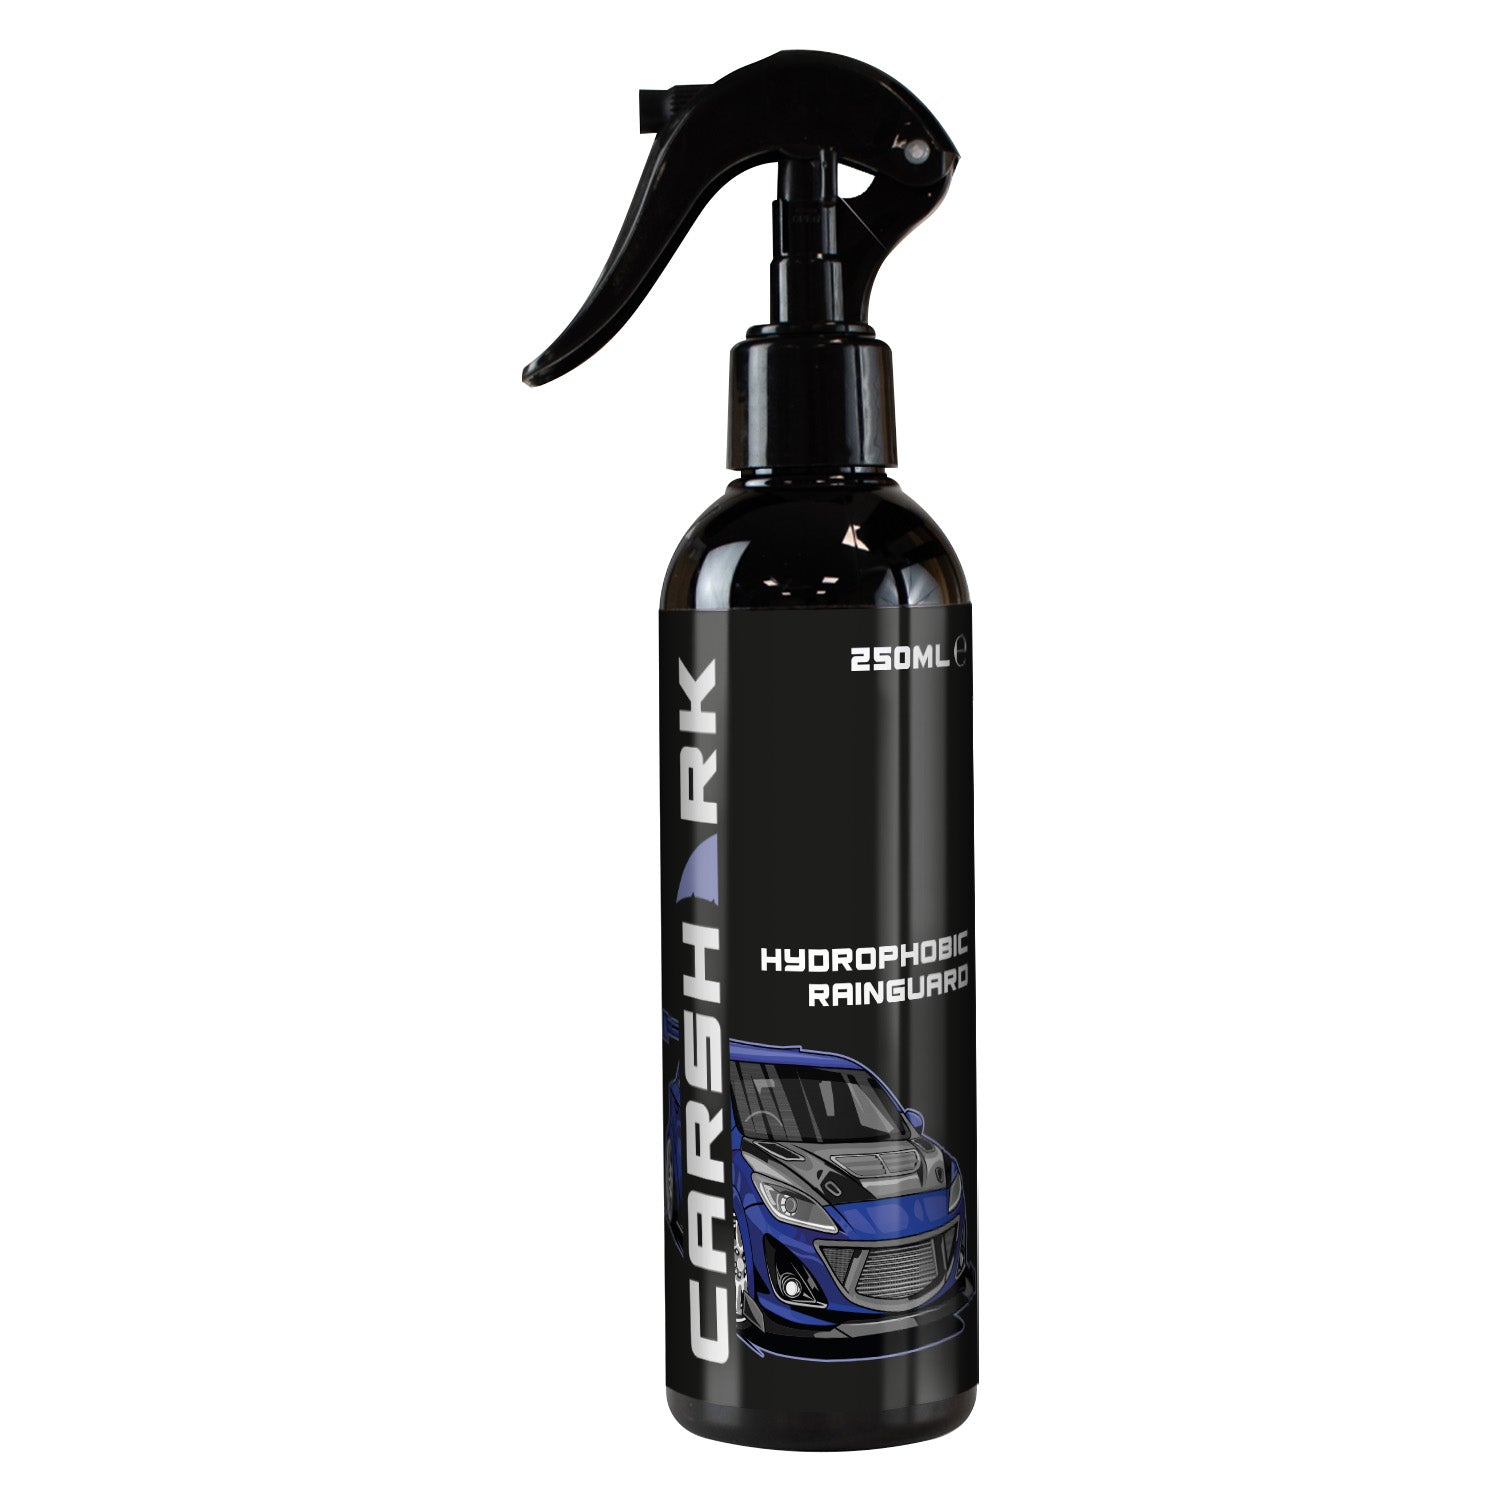 CARSHARK Hydrophobic Rainguard 250 ml - Rain Repellent Coating